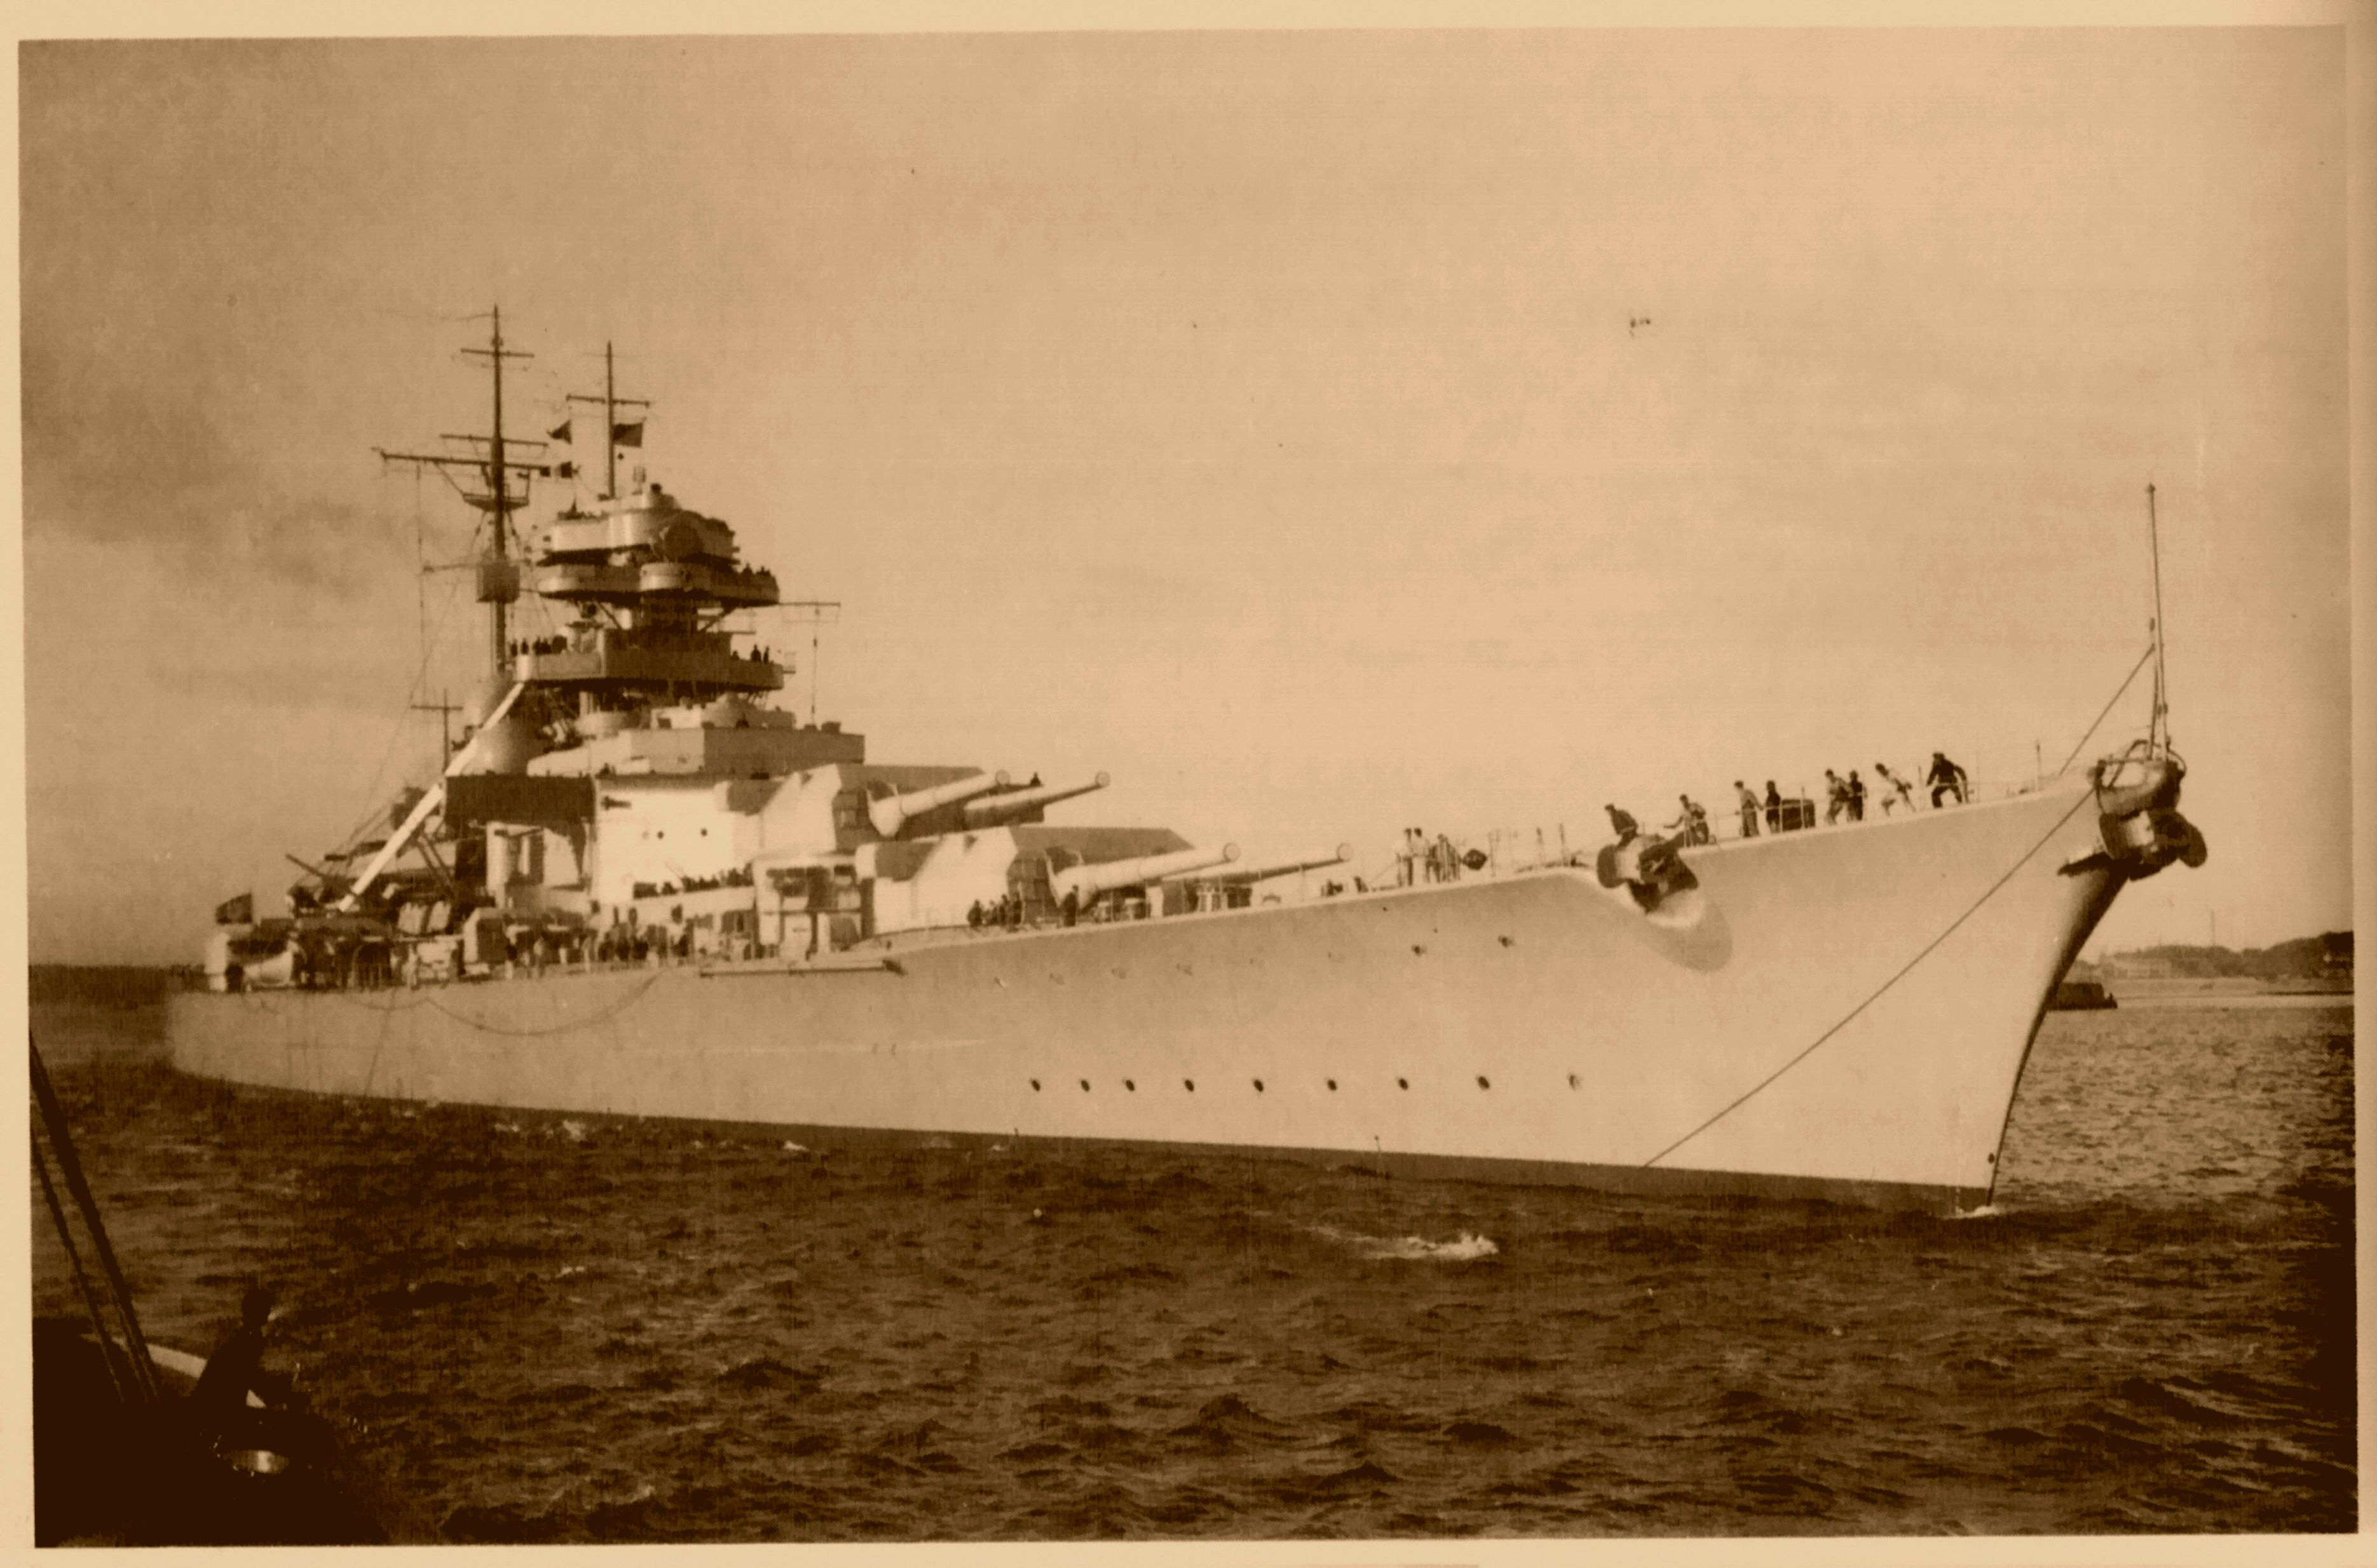 Military German battleship Bismarck HD Wallpaper